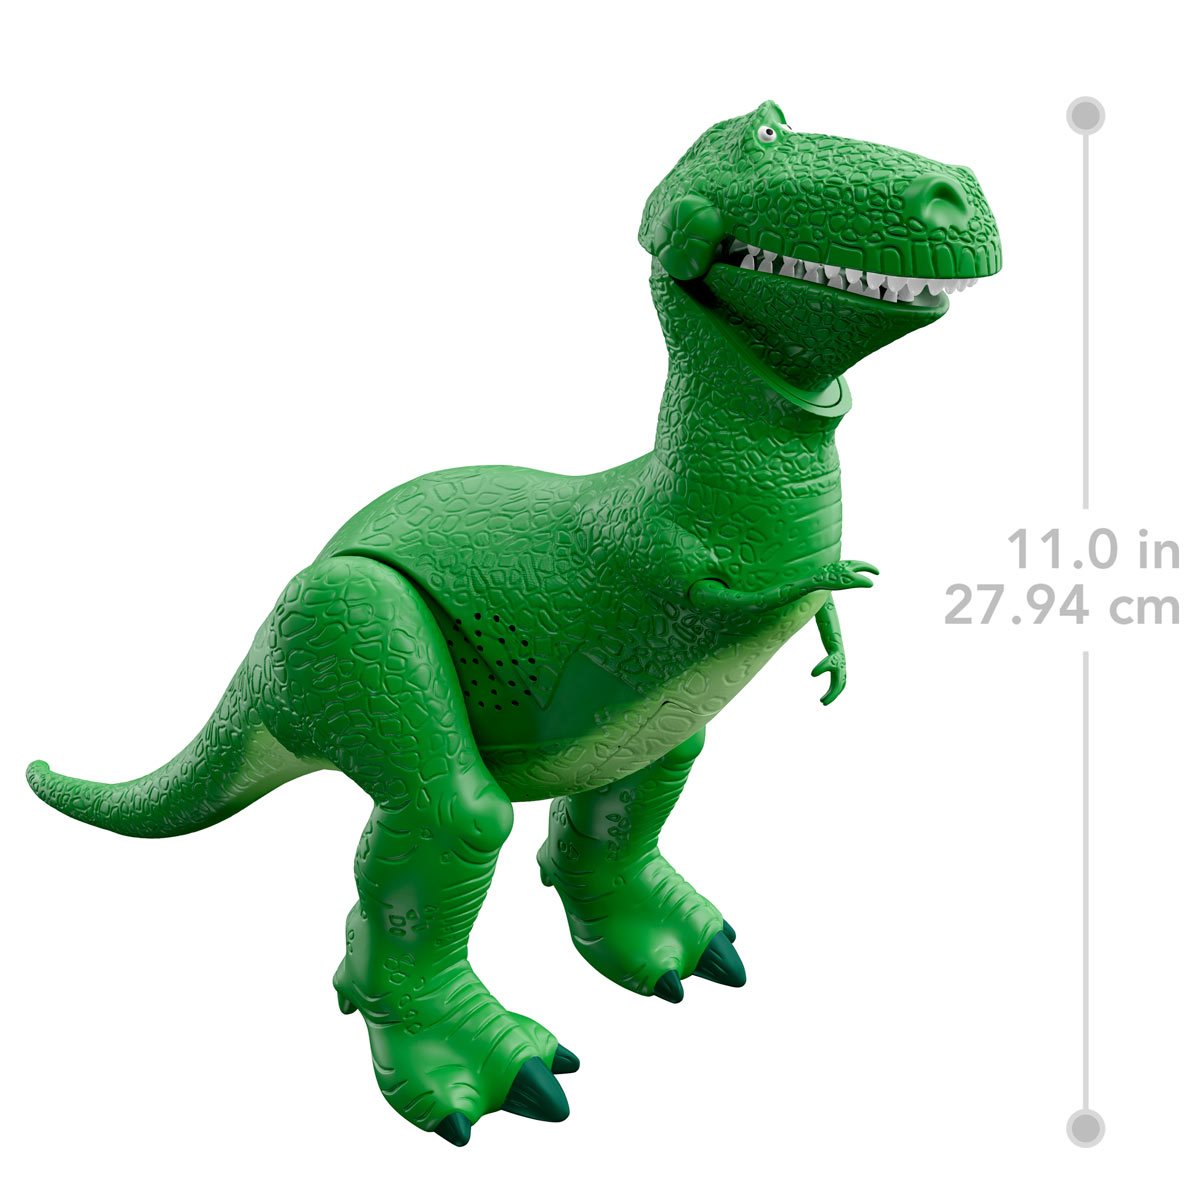 Disney Pixar Toy Story Rex Action Figure (11)